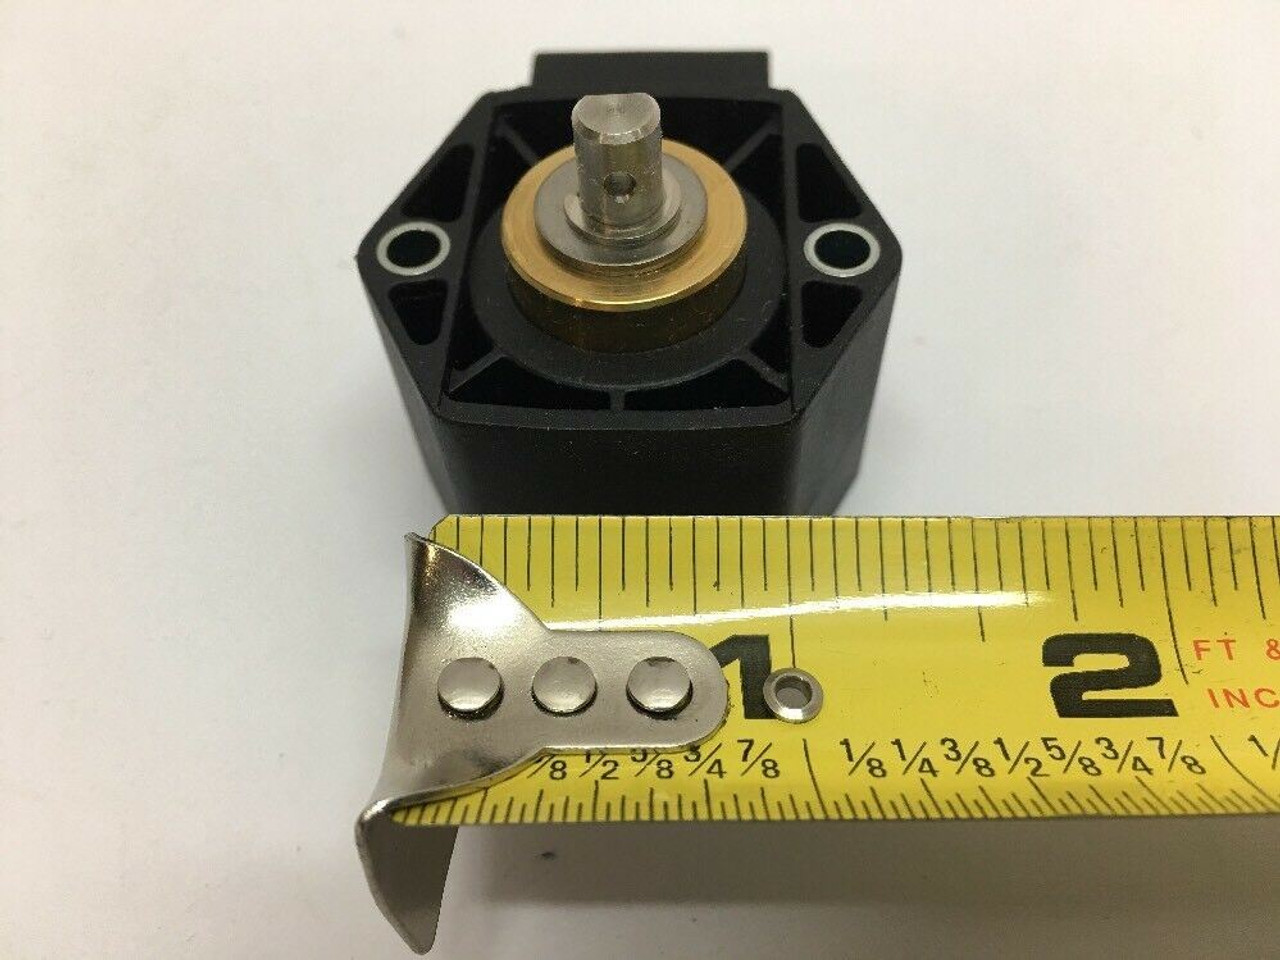 Pressure Indicator Sensor 8089-118 Lombardini